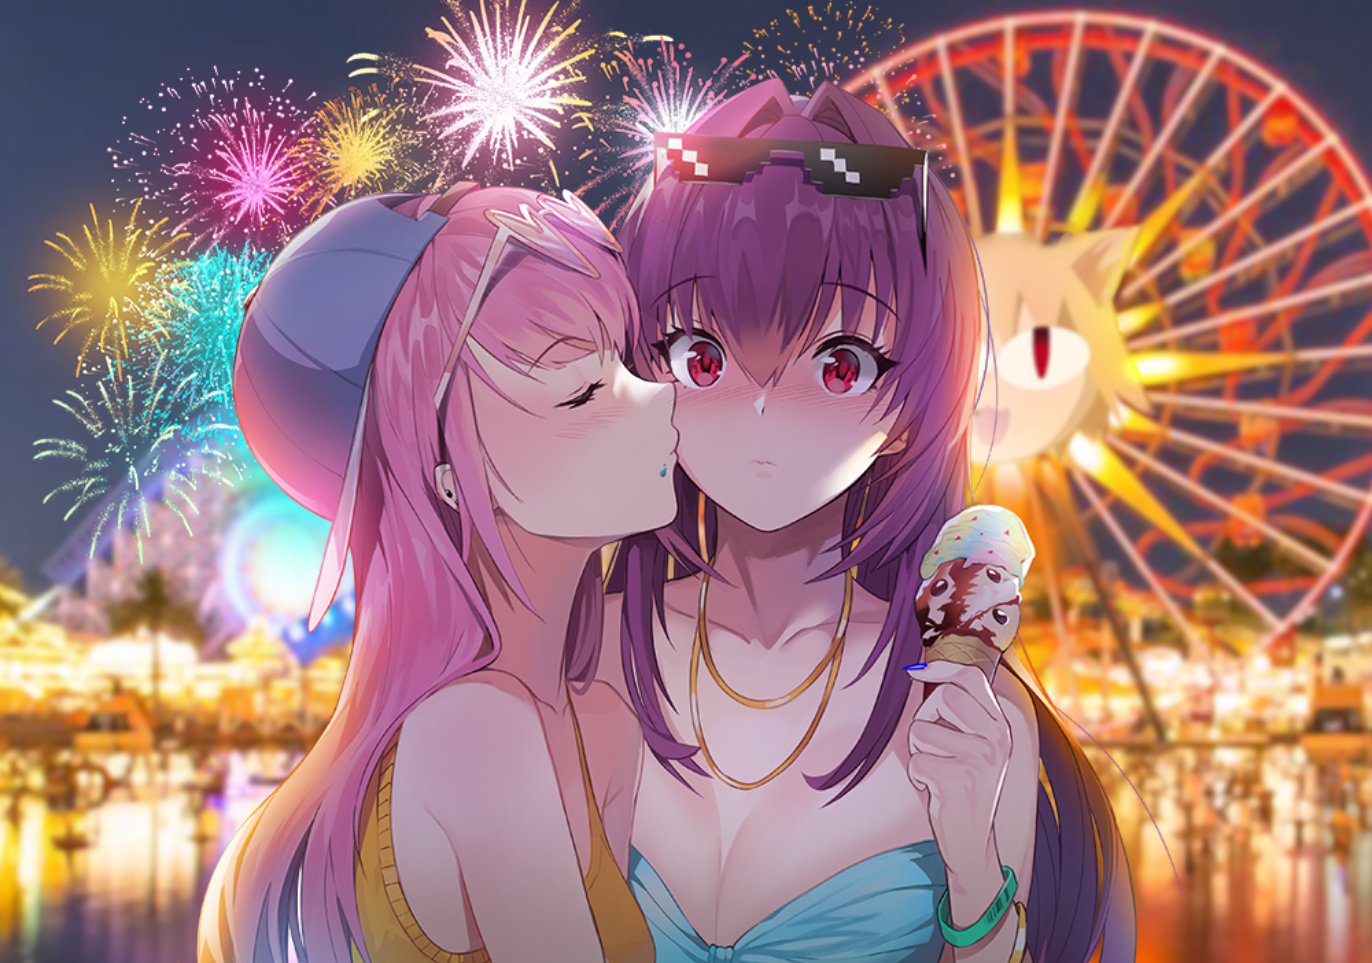 Anime Anime Girls Ferris Wheel Kissing Blushing Long Hair Hat Fireworks Ice Cream Bracelets Sunglass 1372x963